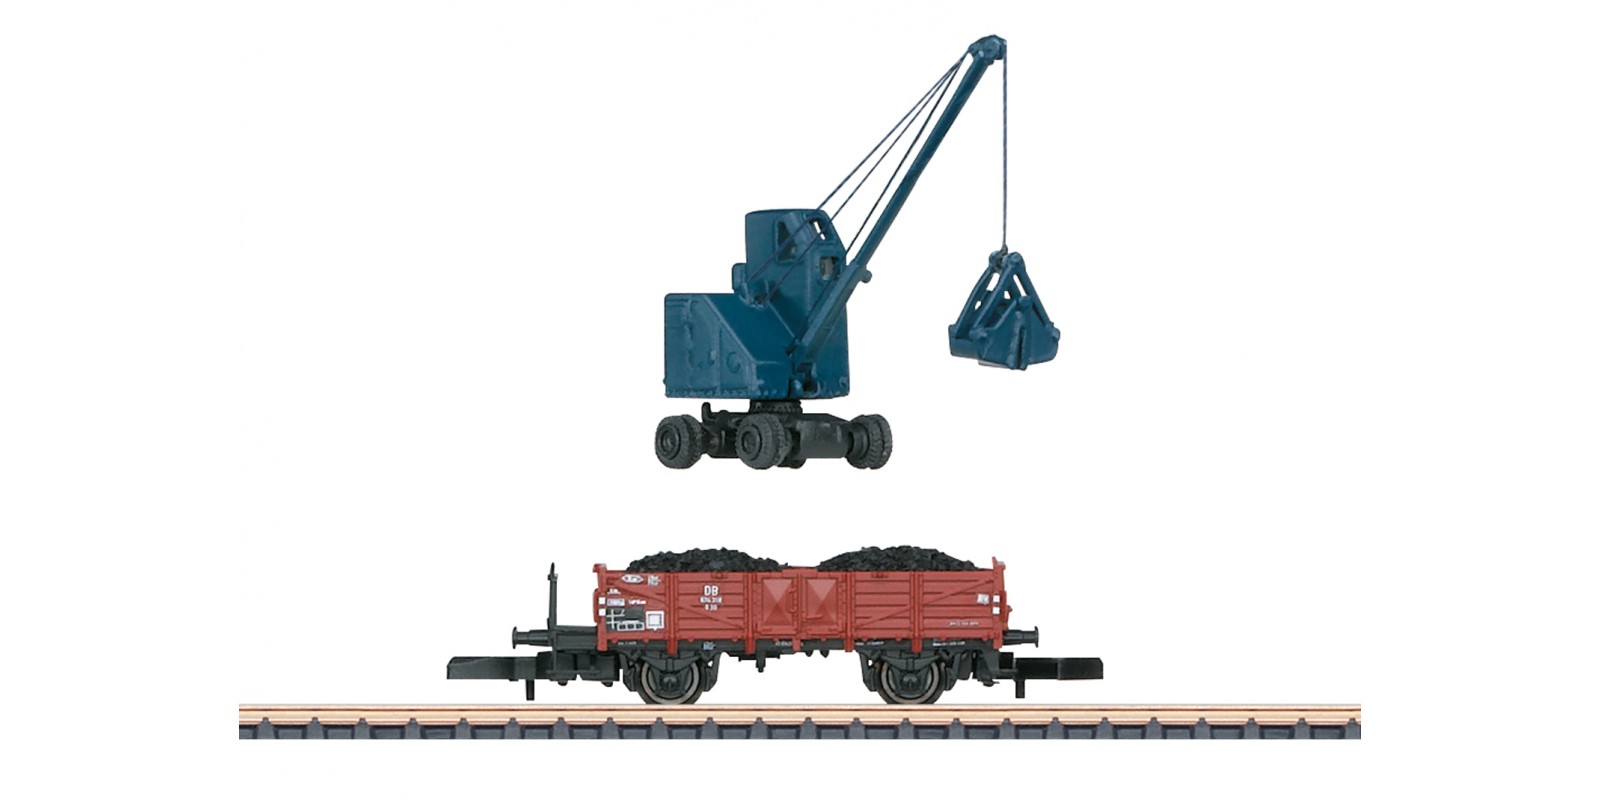 82337 Coal Loading Theme Set